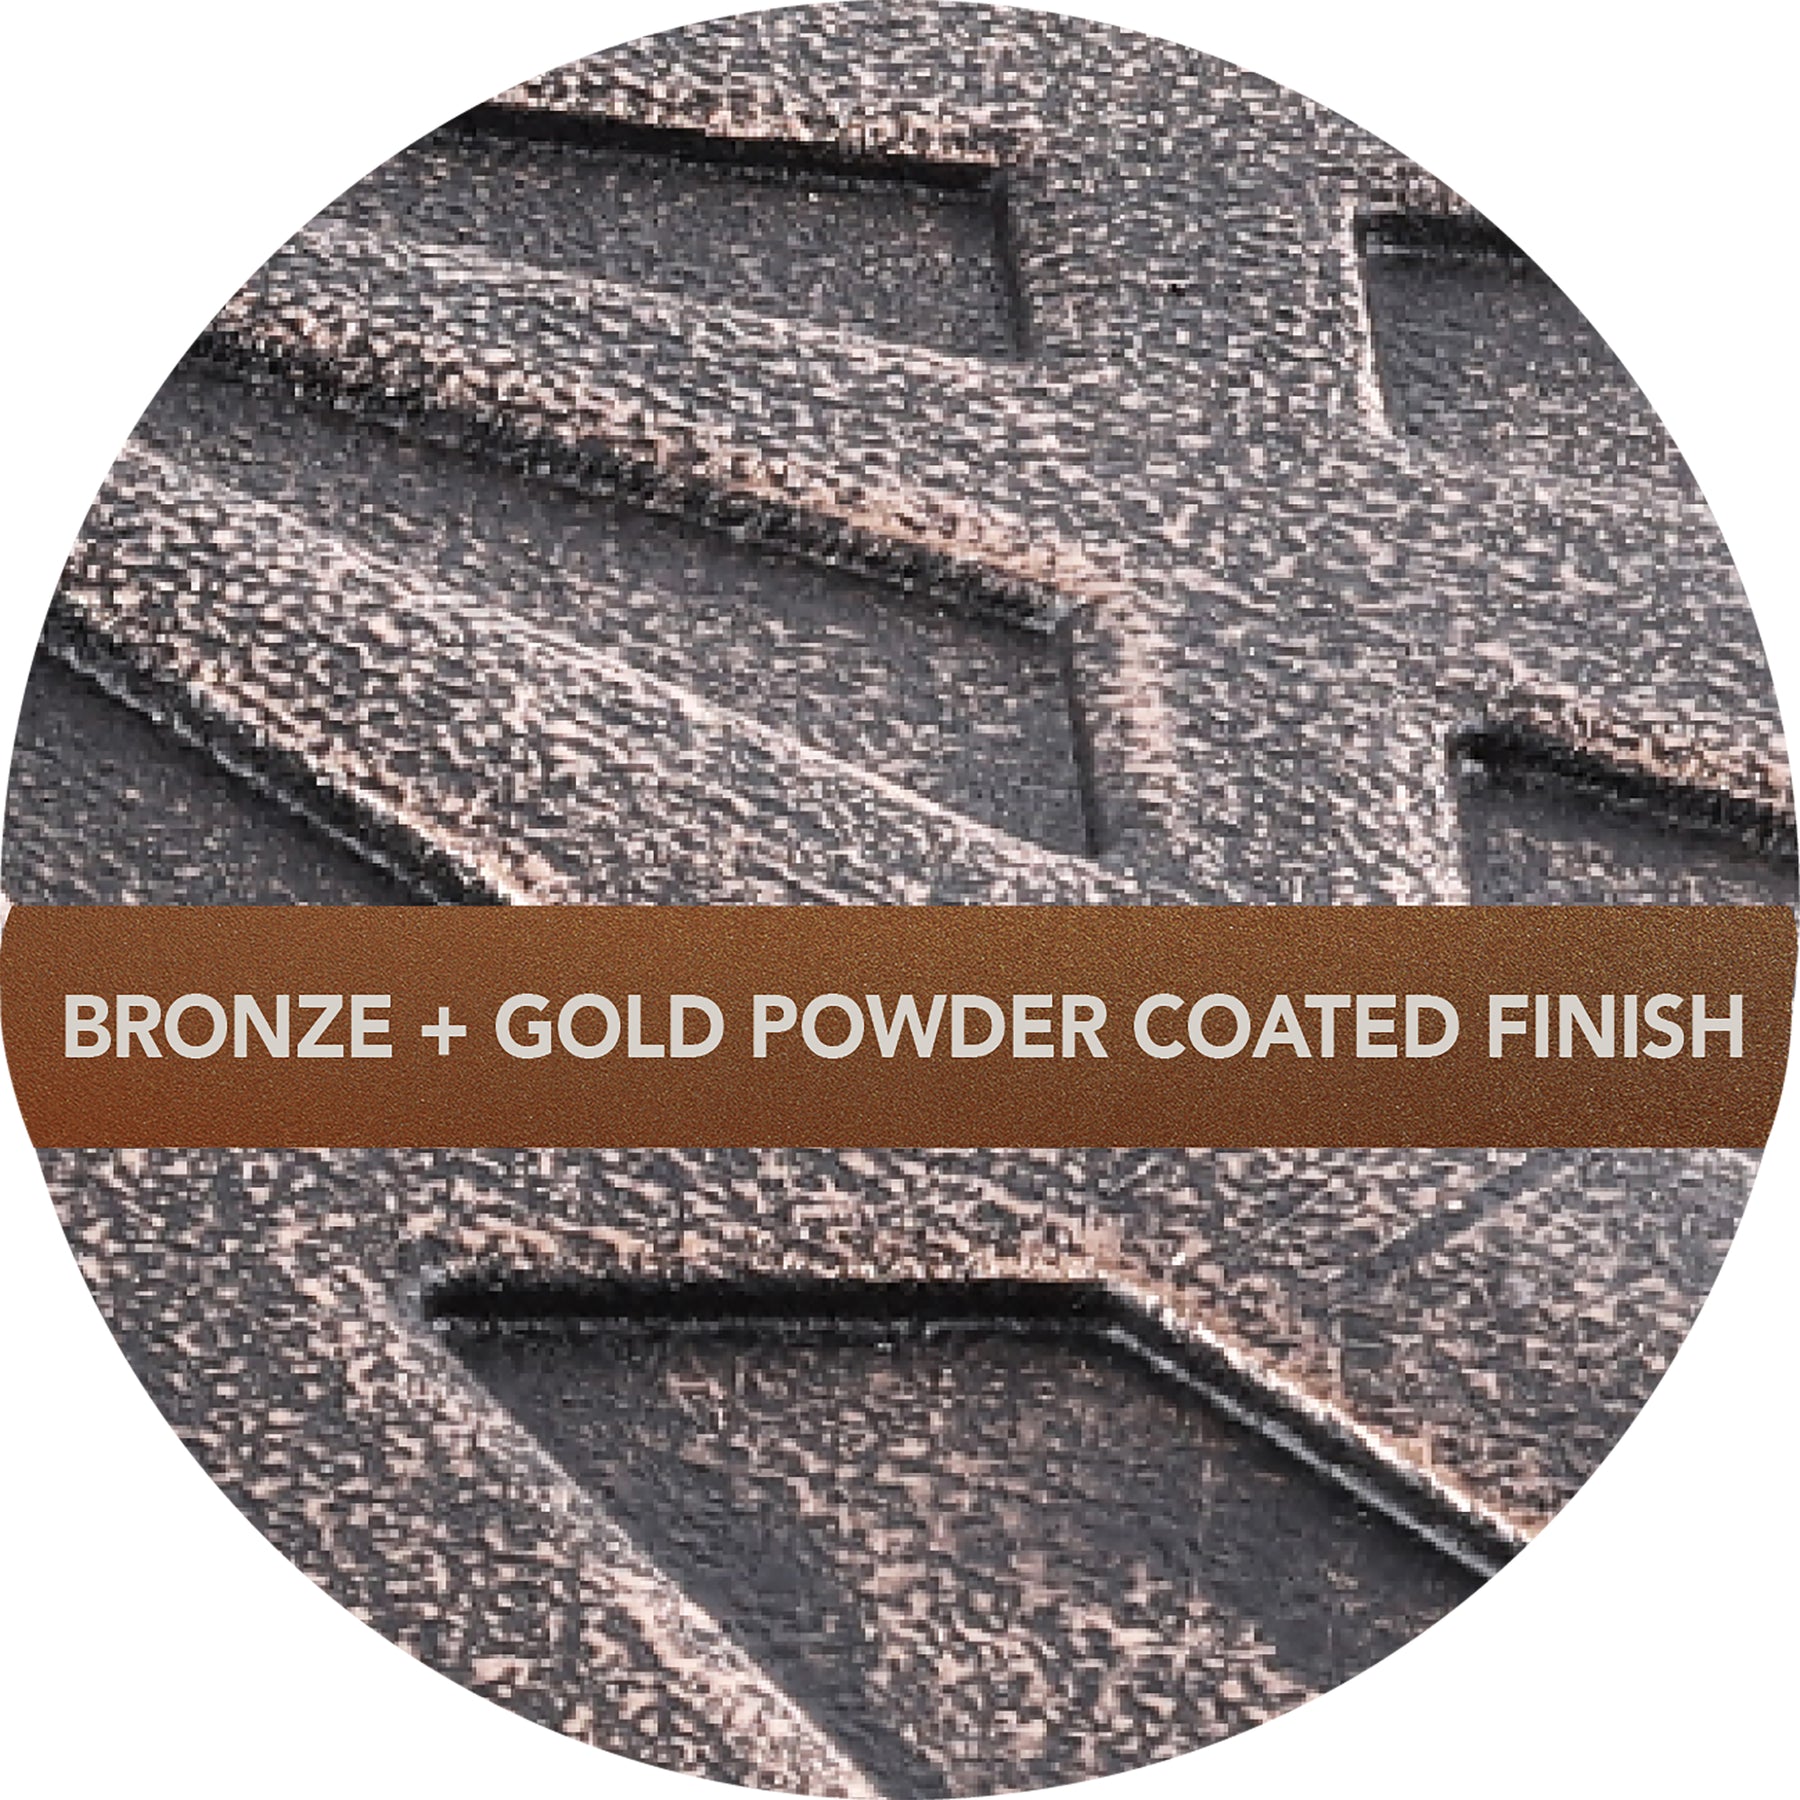 Bronze and gold powder coated finish.